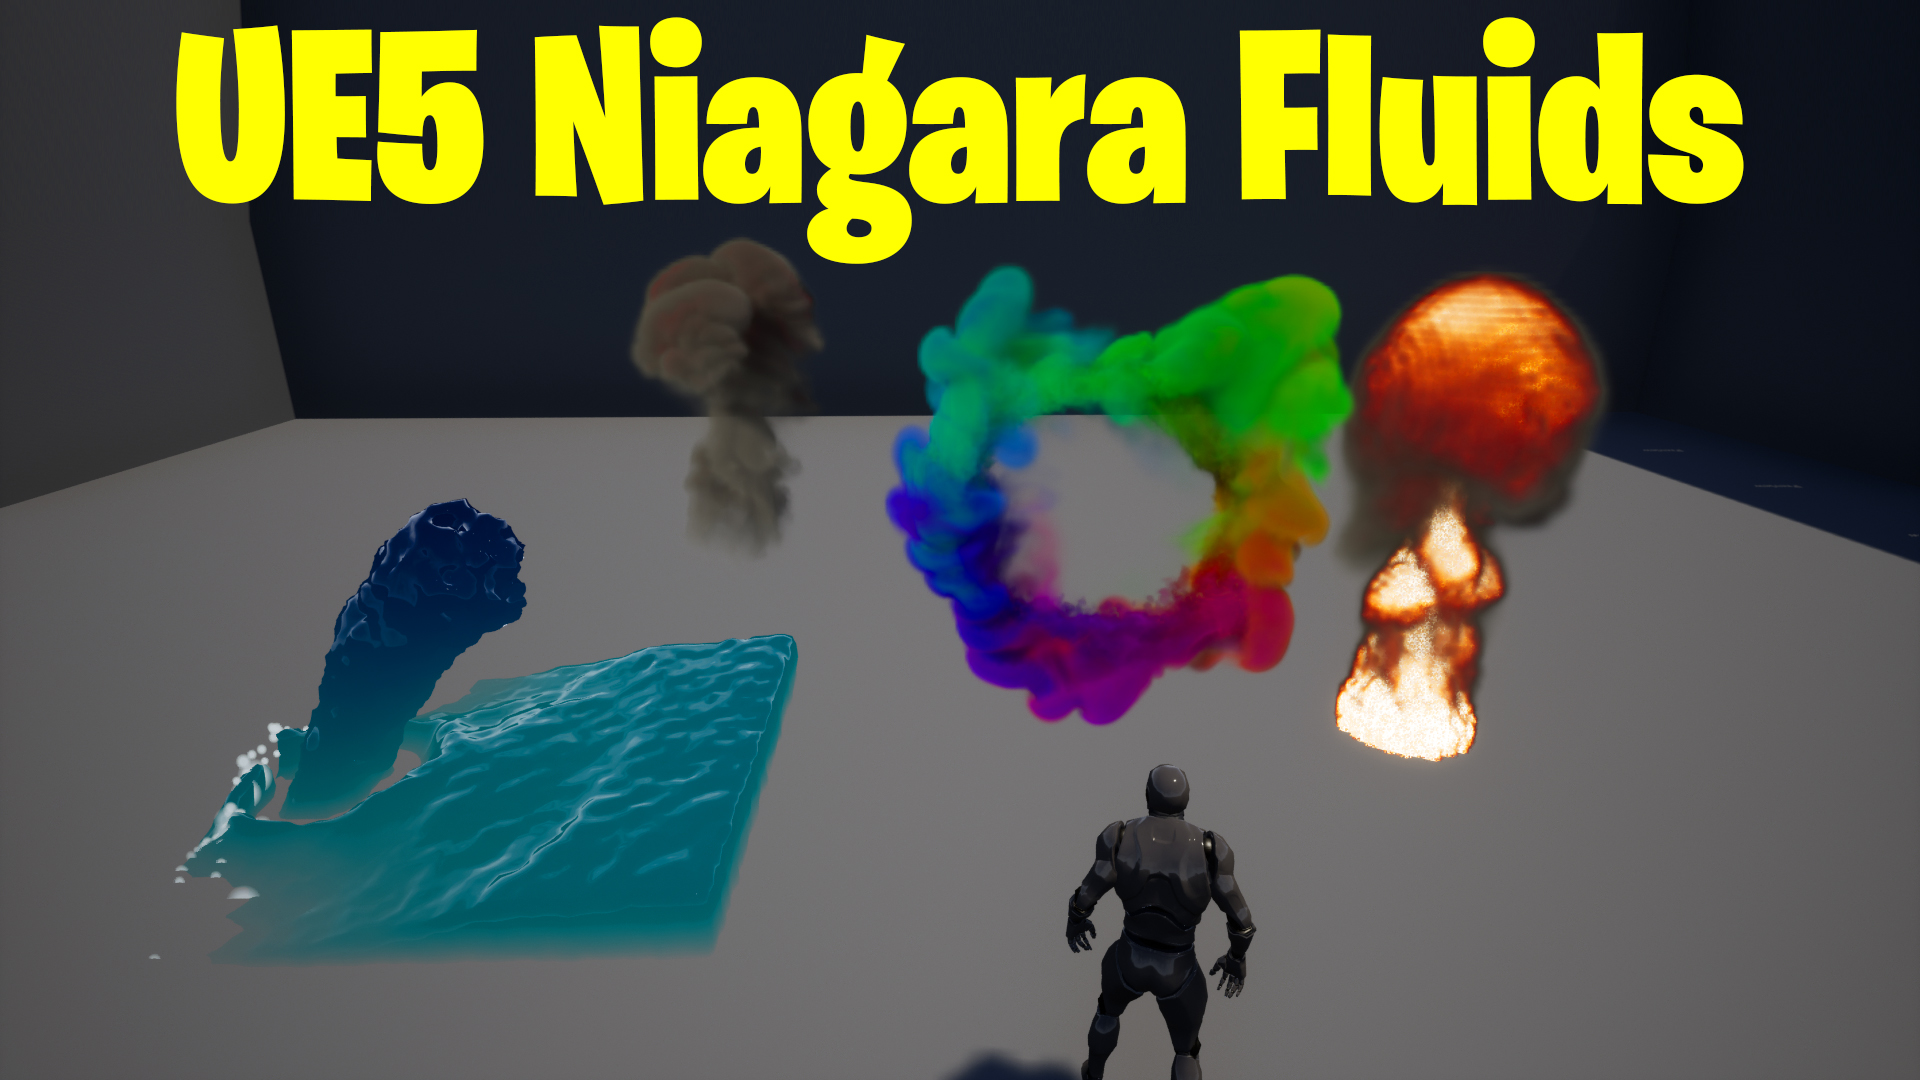 UE5 Niagara Fluid is Amazing!